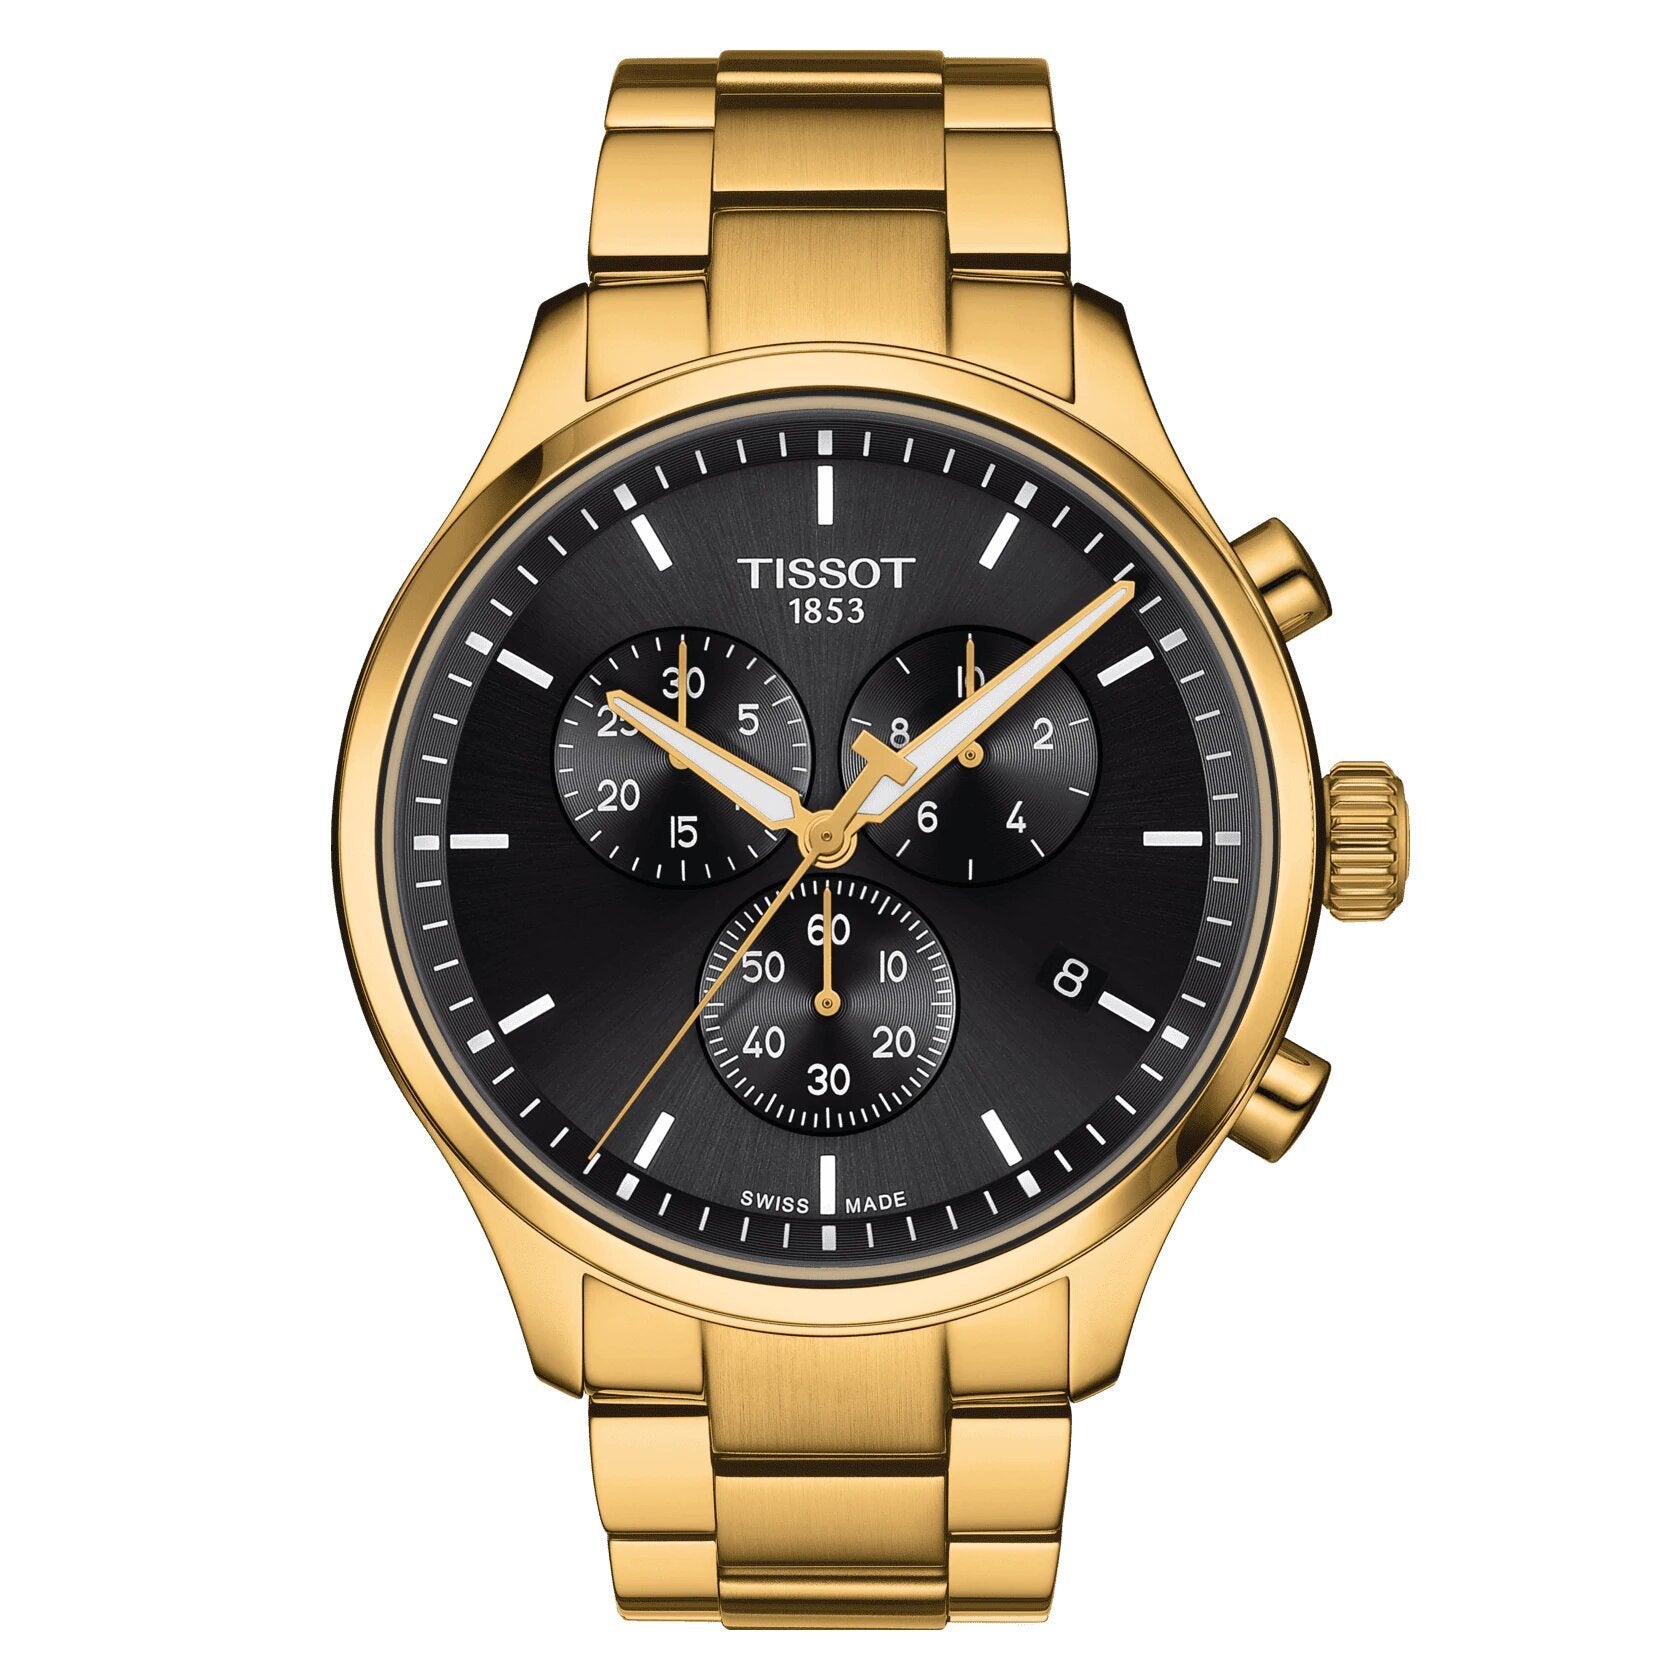 Men's CHRONO XL CLASSIC Watch (T1166173305100)